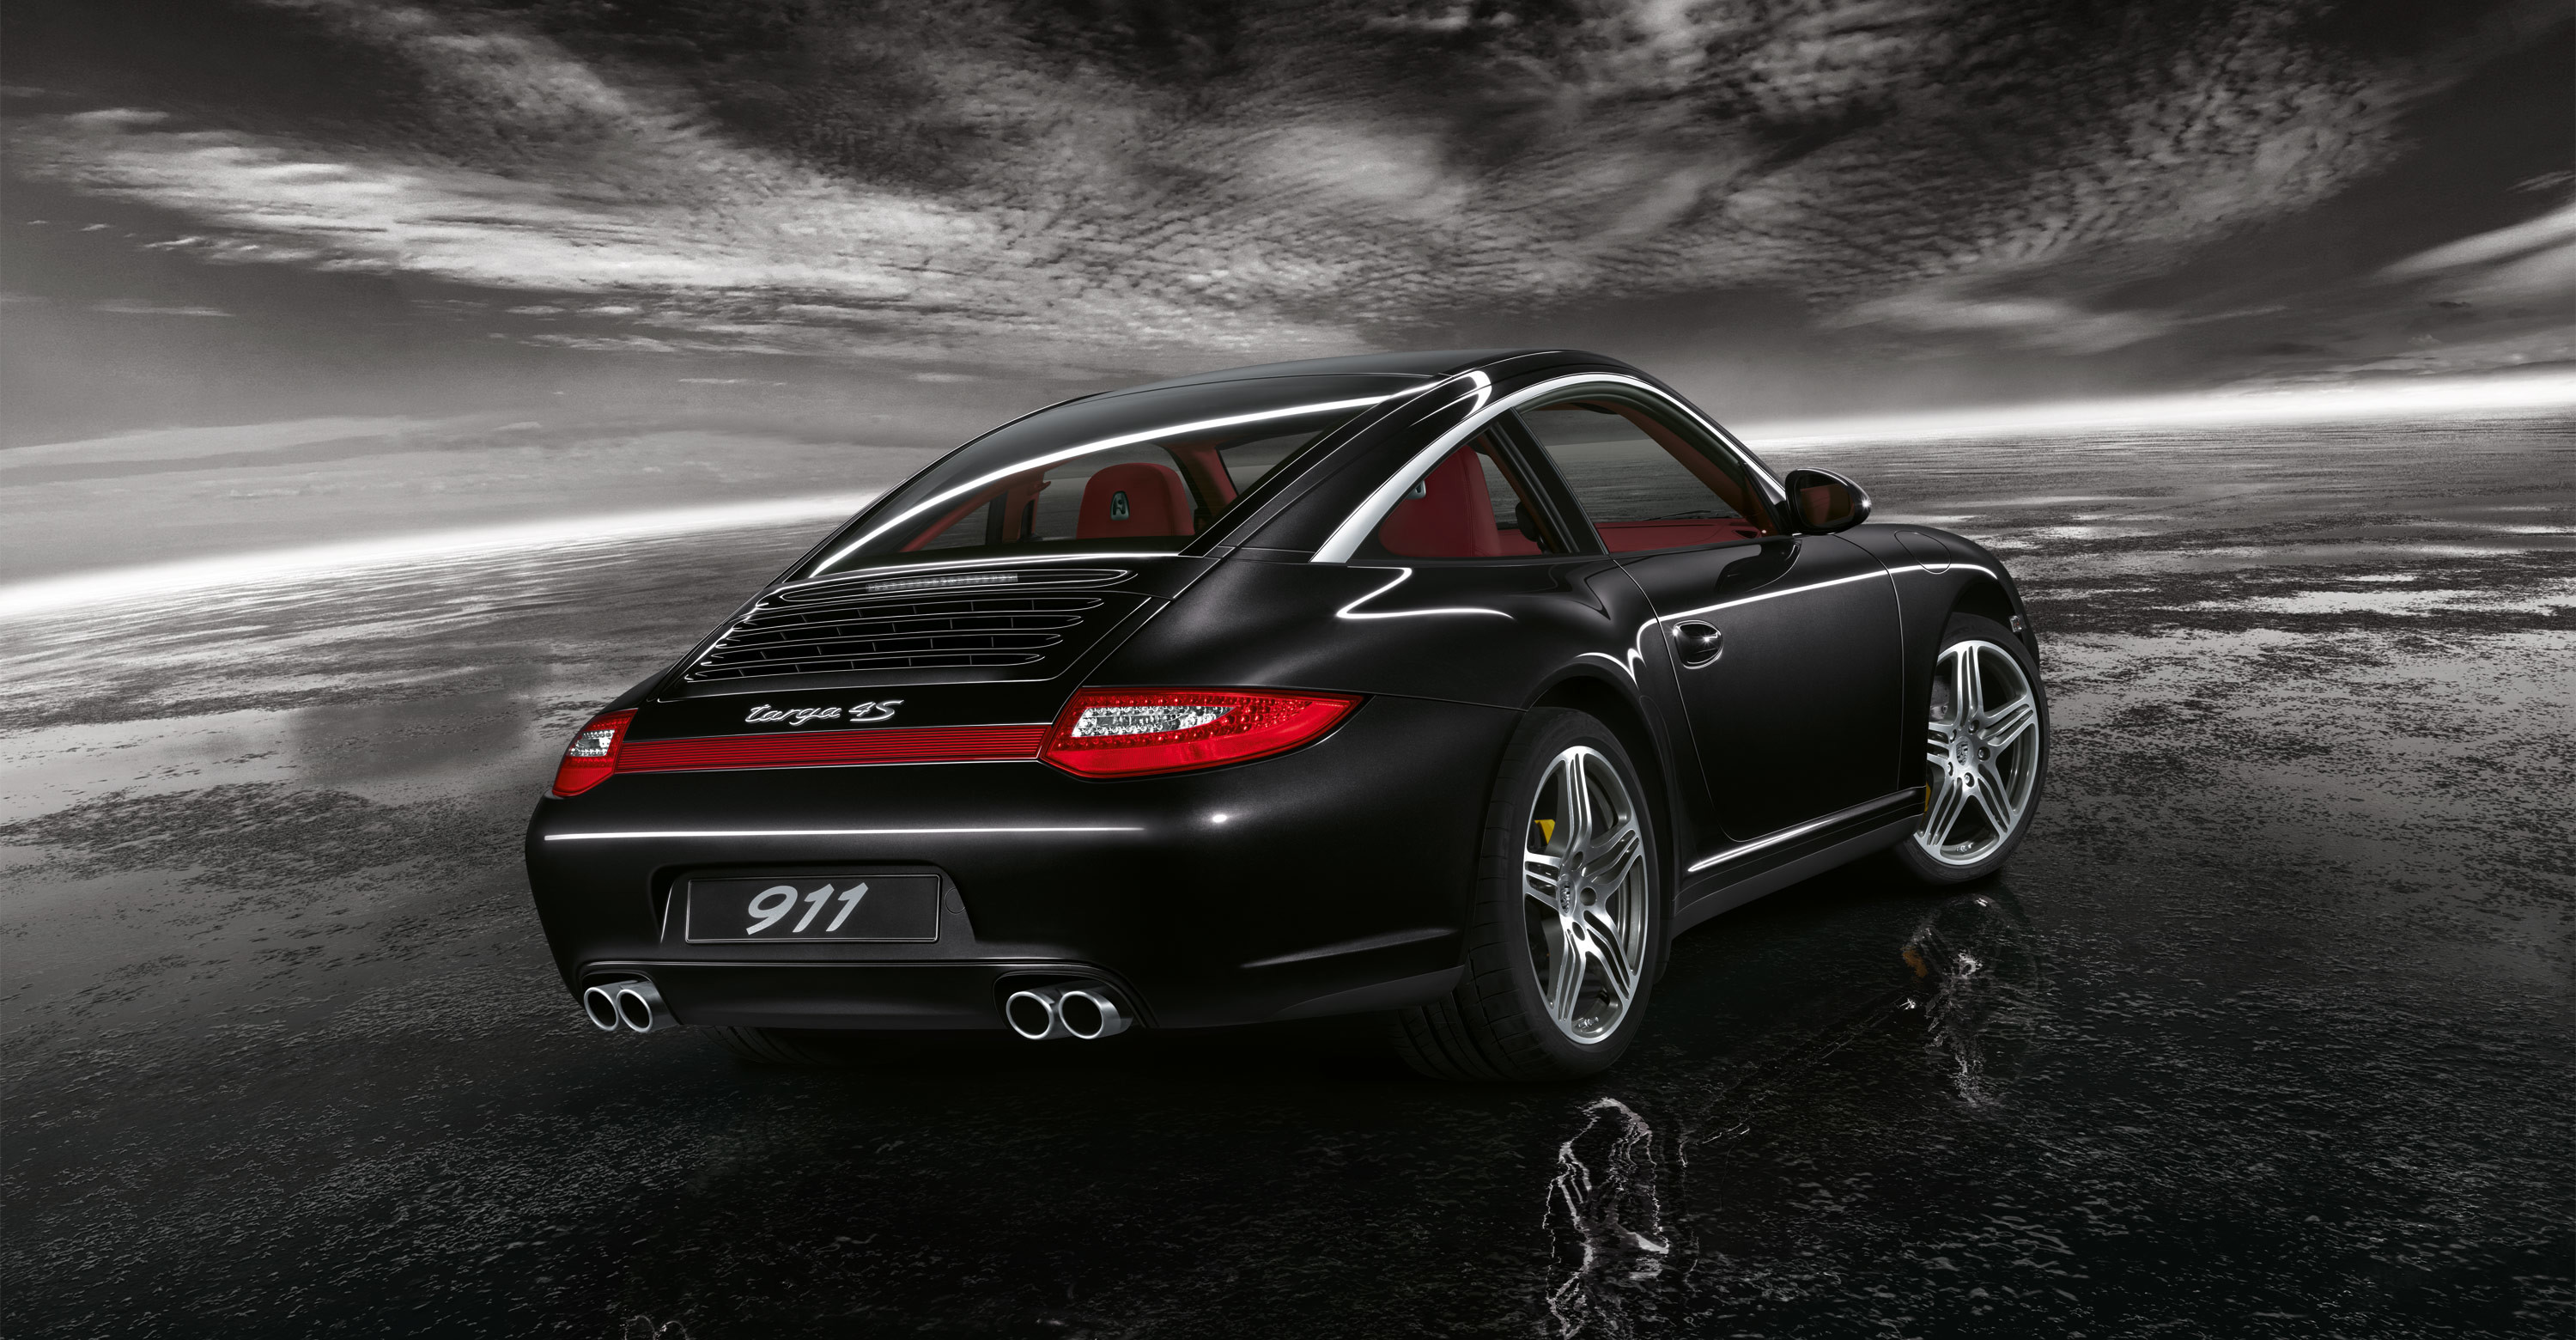 3000x1560 wallpaper.wiki-Black-Porsche-911-Background-PIC-WPD007745